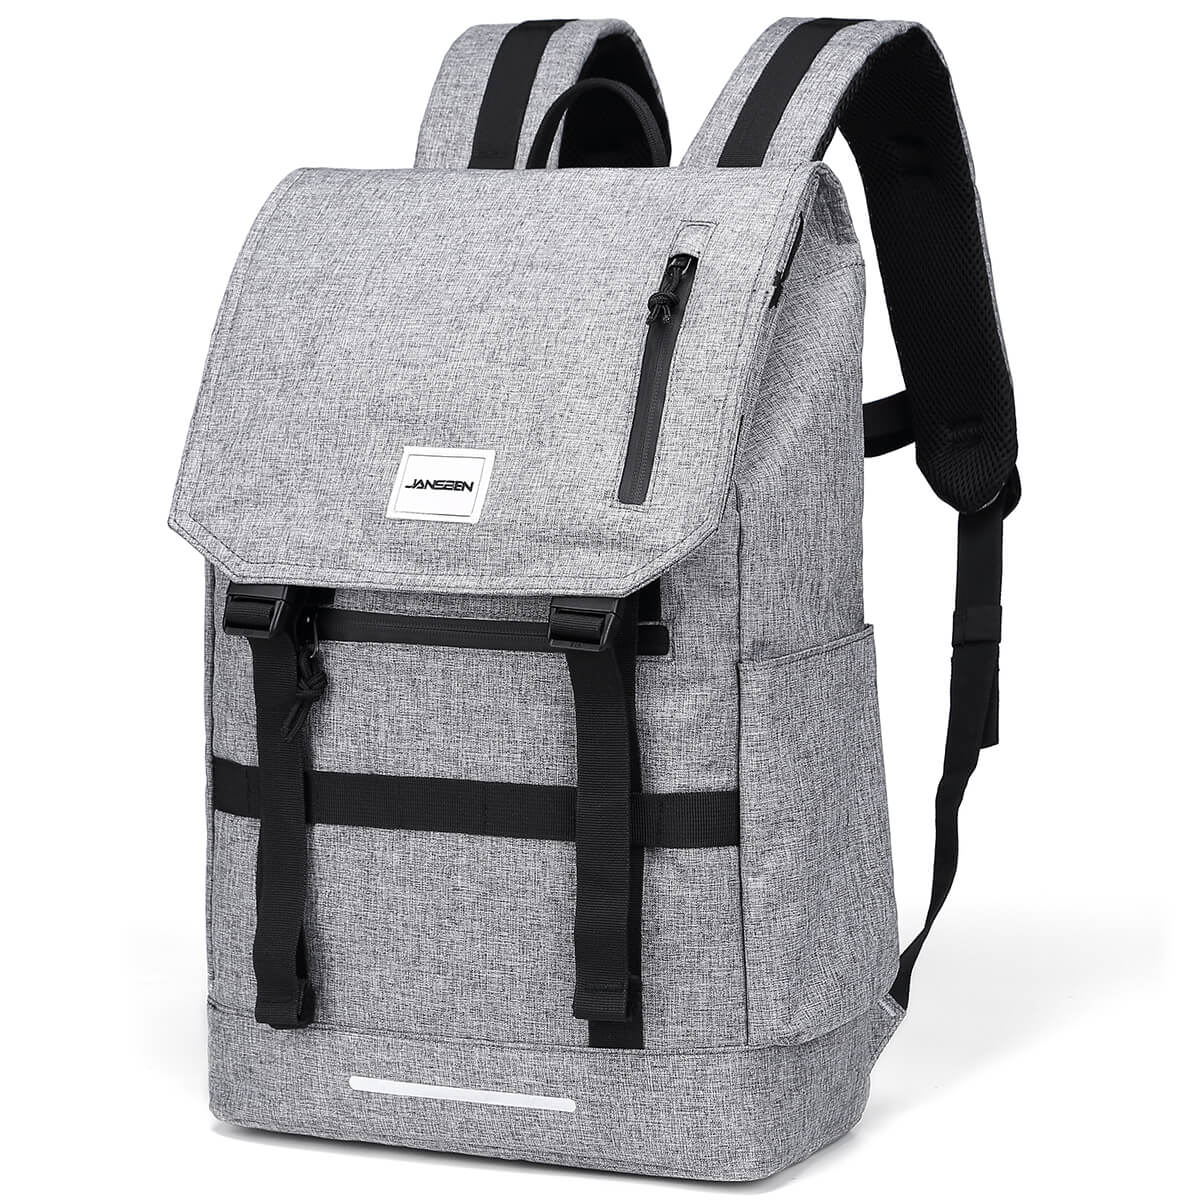 3-in-1-Convertible-Backpack-Jansben-C020-gray